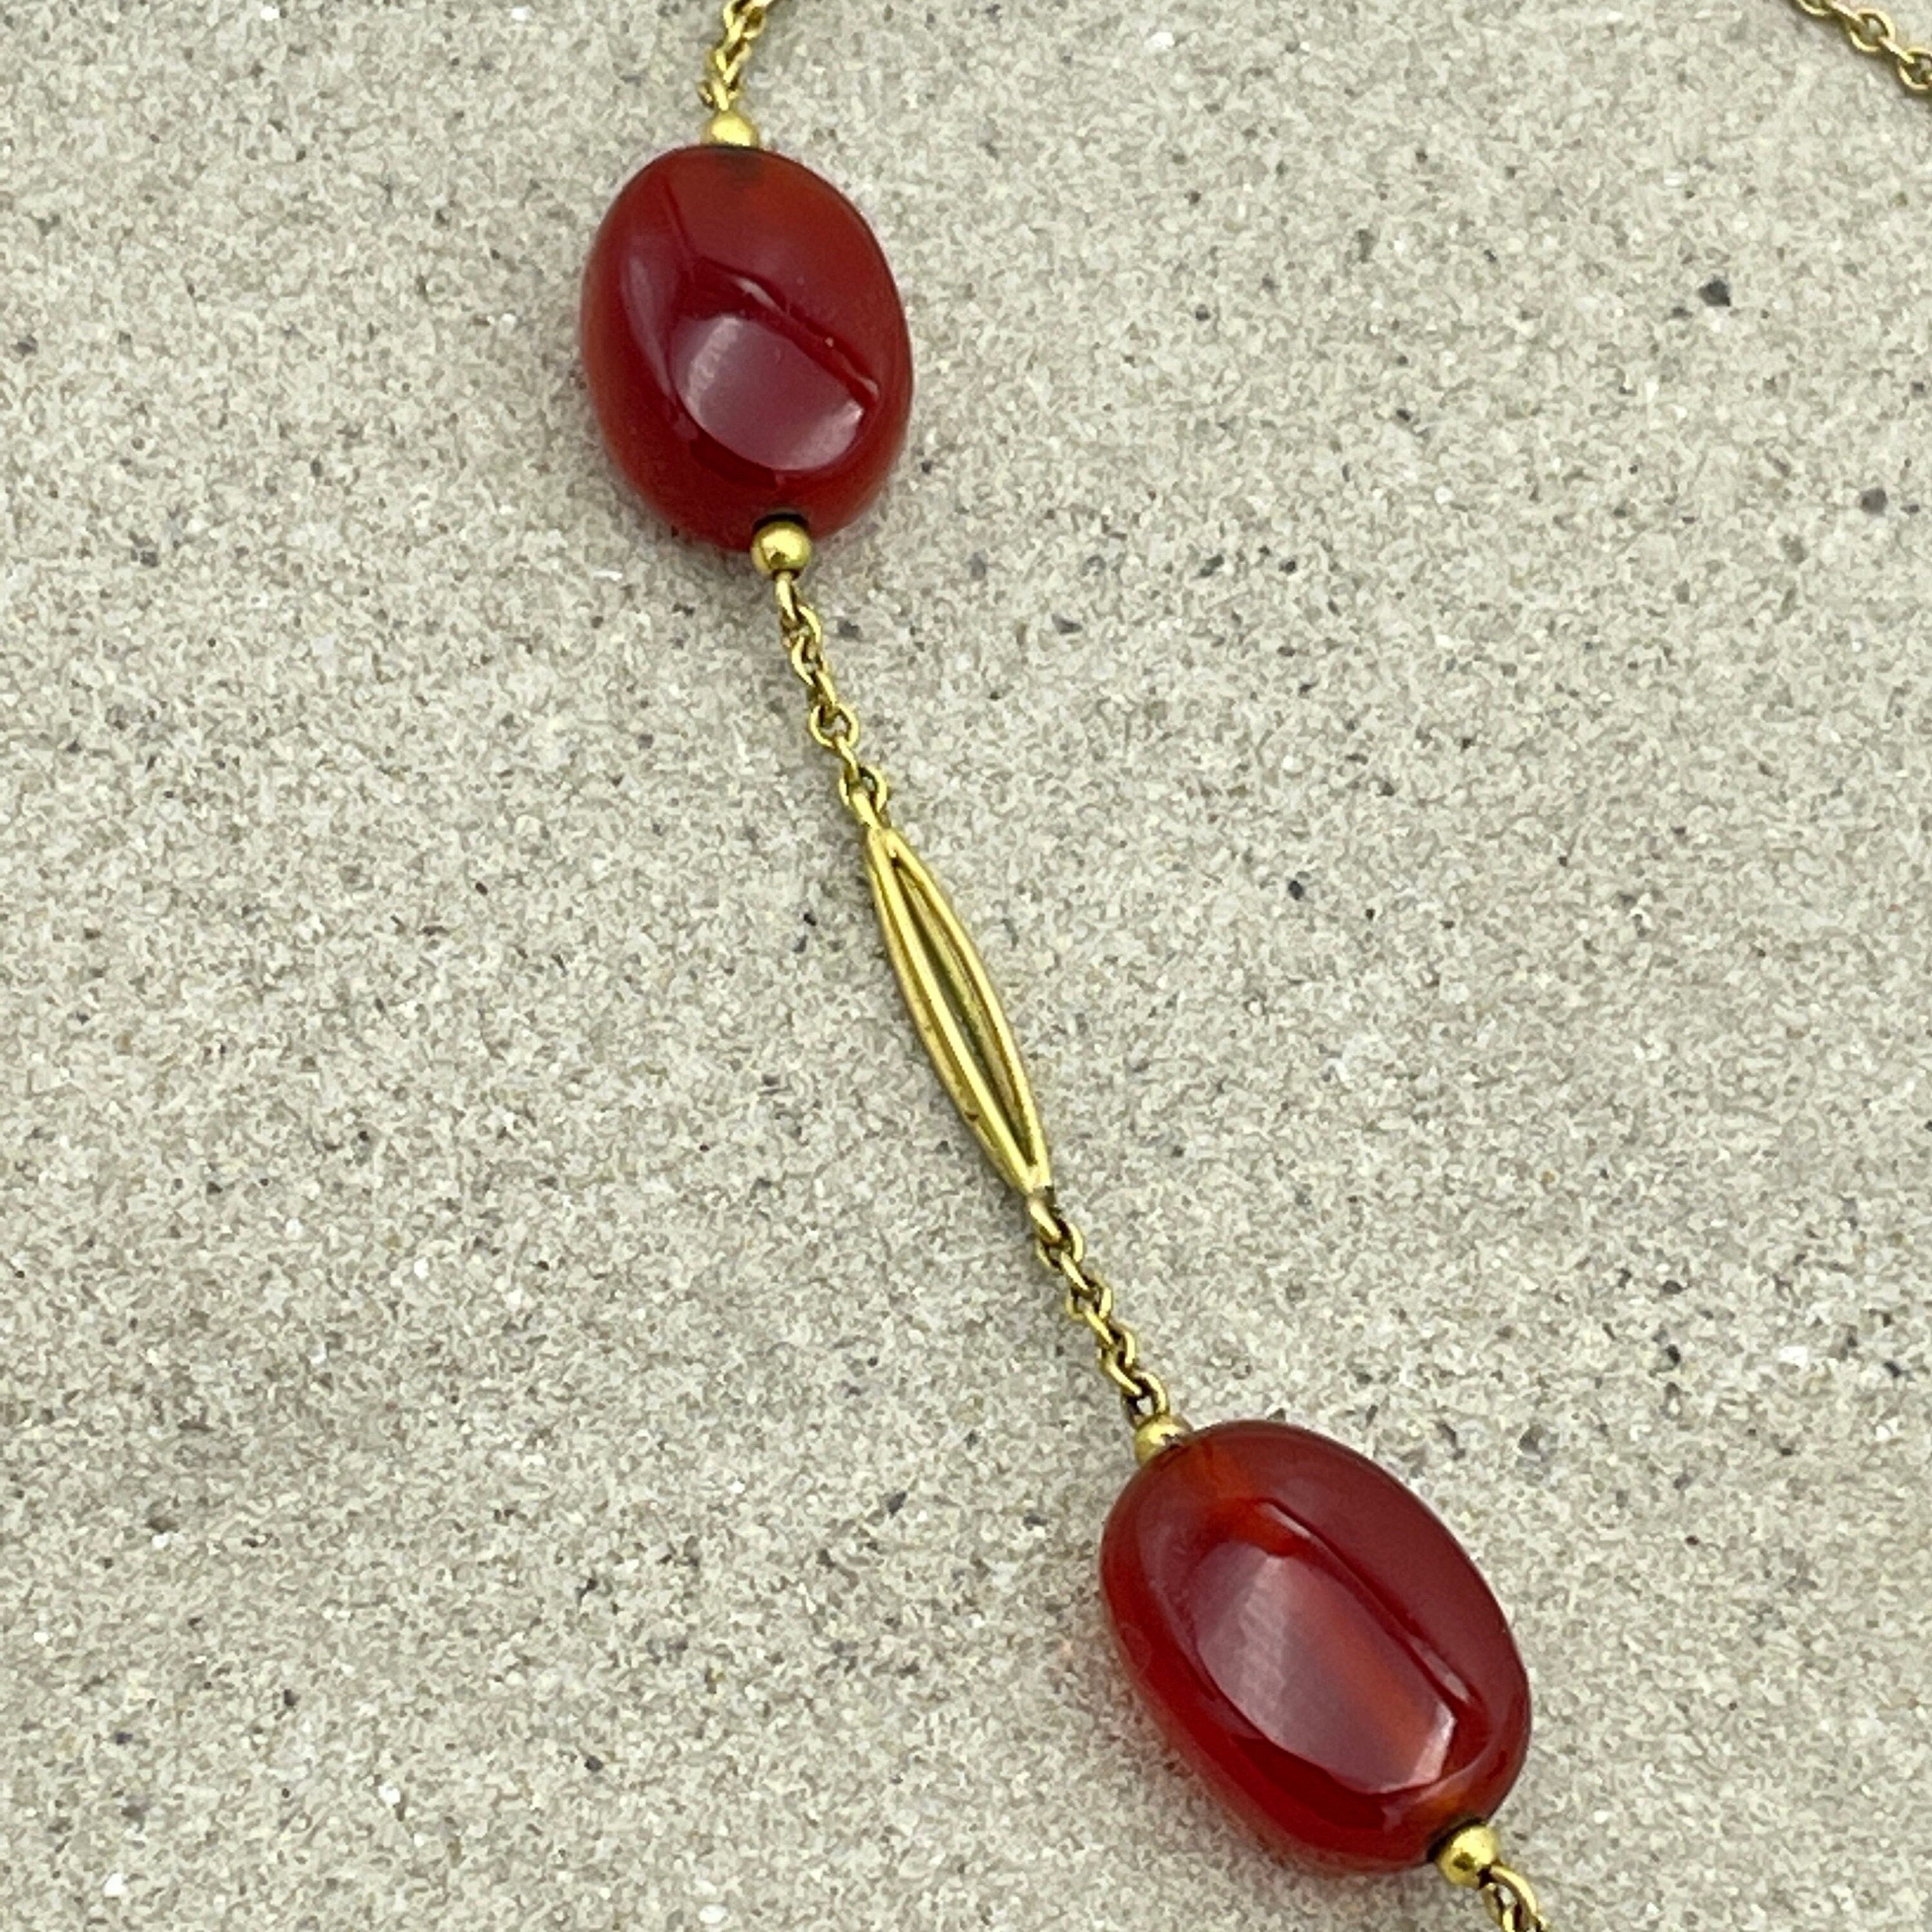 Art deco 9ct gold & carnelian beaded chain necklace c1920s